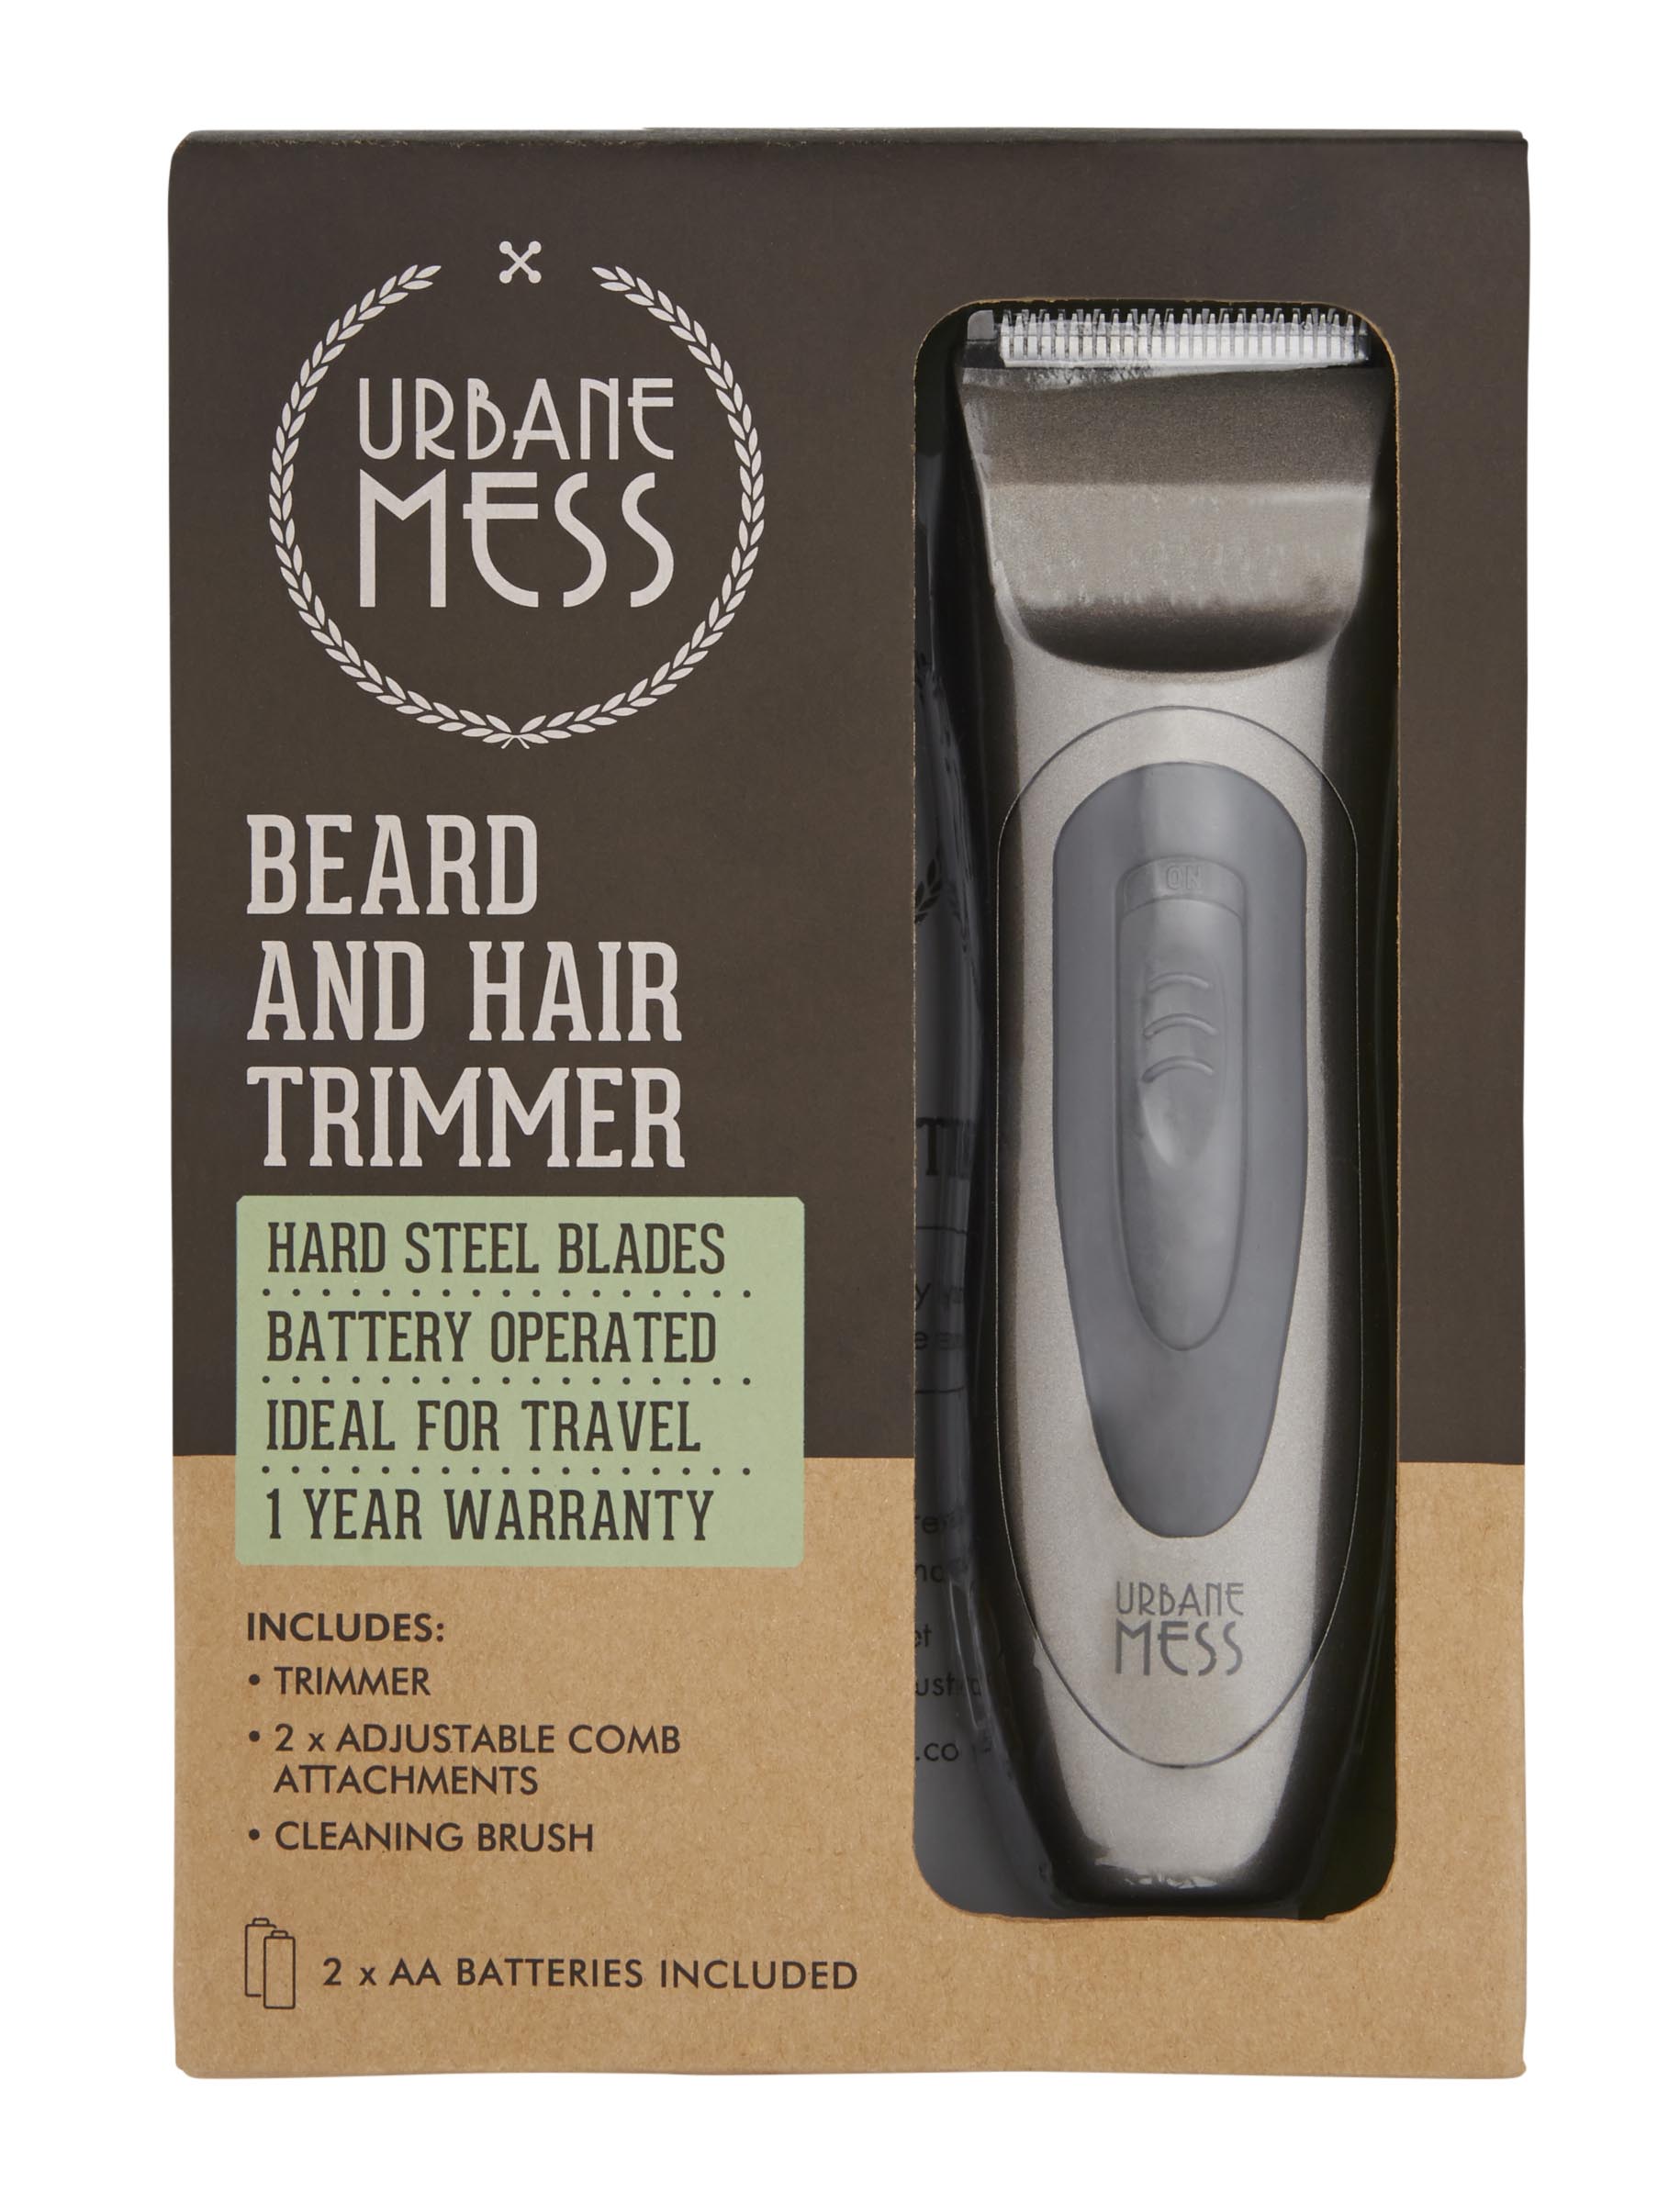 Beard And Hair Trimmer - Urbane Mess